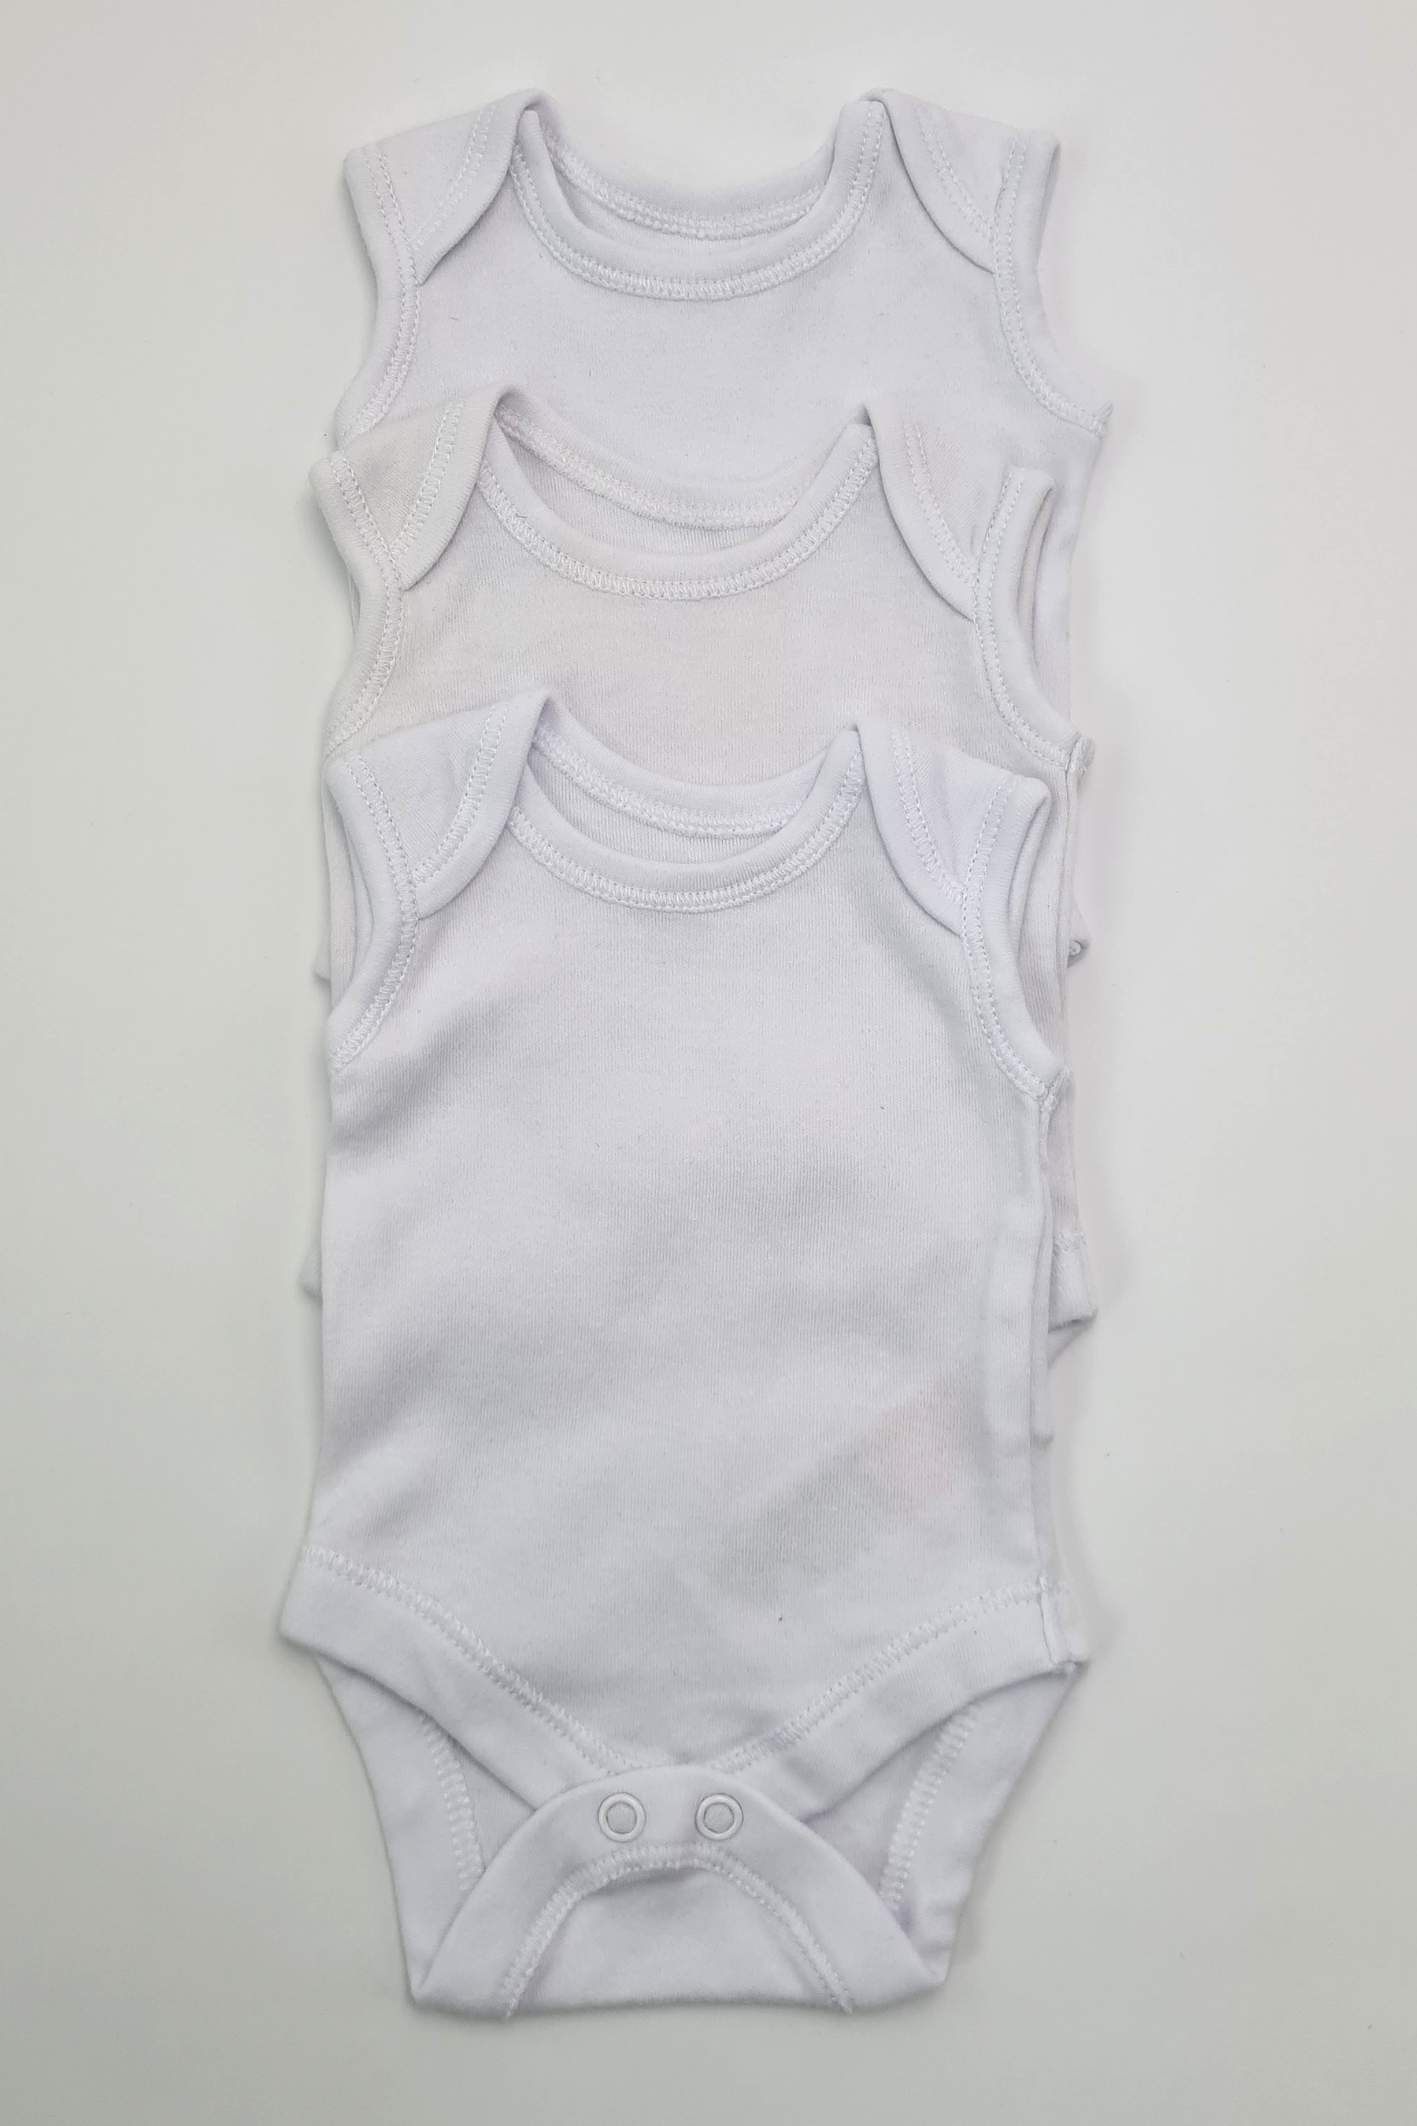 Tiny Baby (5lbs) - 3 Sleeveless White Bodysuits (Primark)